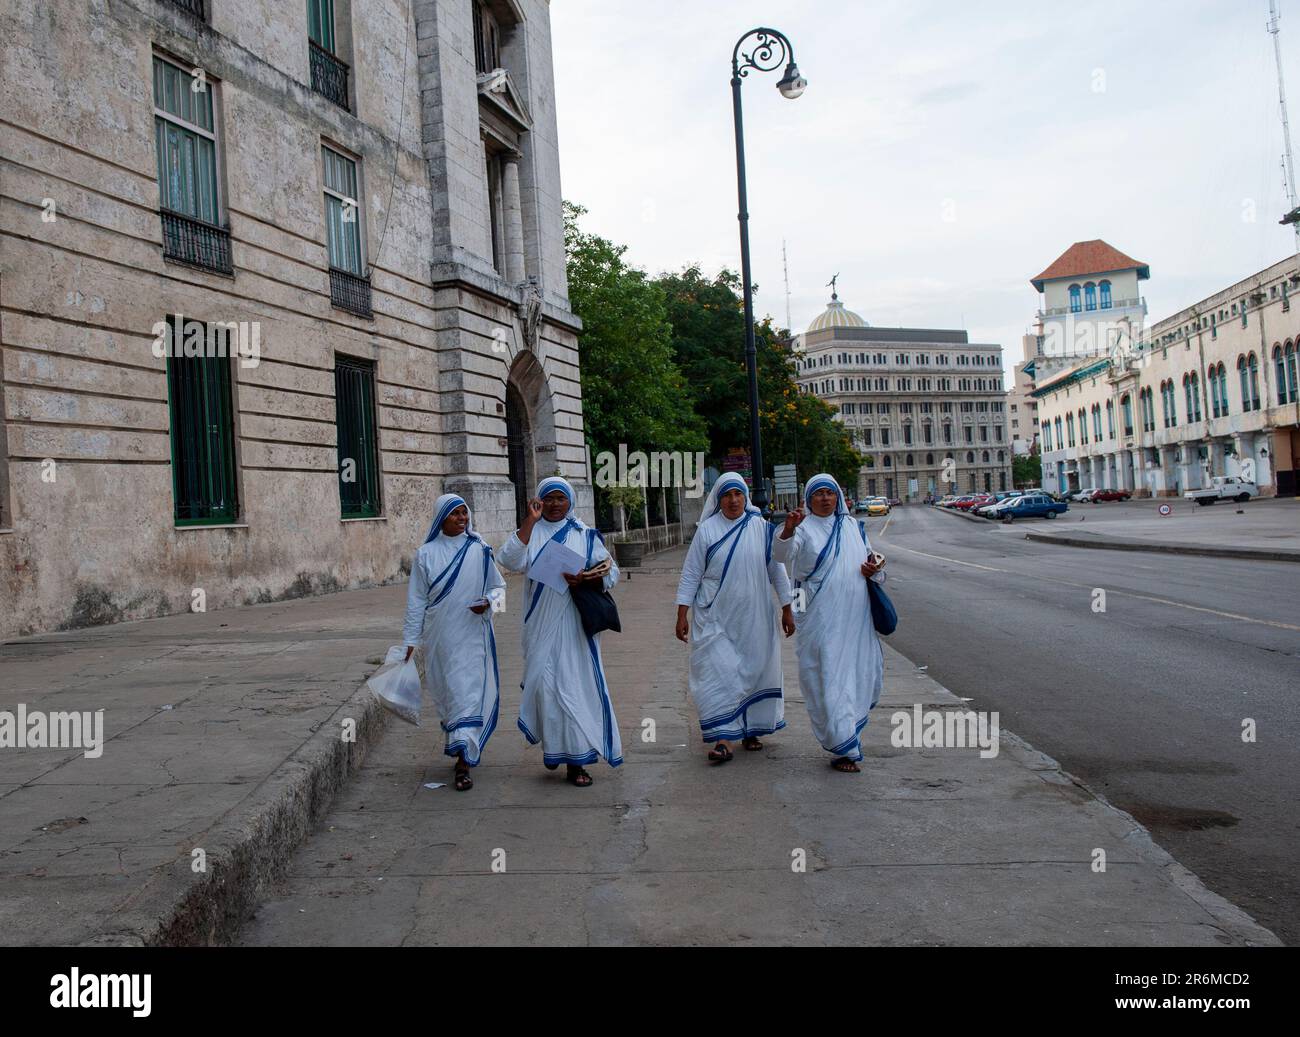 Cuba. Mère Teresa moniales marchant dans les rues de Cuba. Usage éditorial uniquement. Banque D'Images